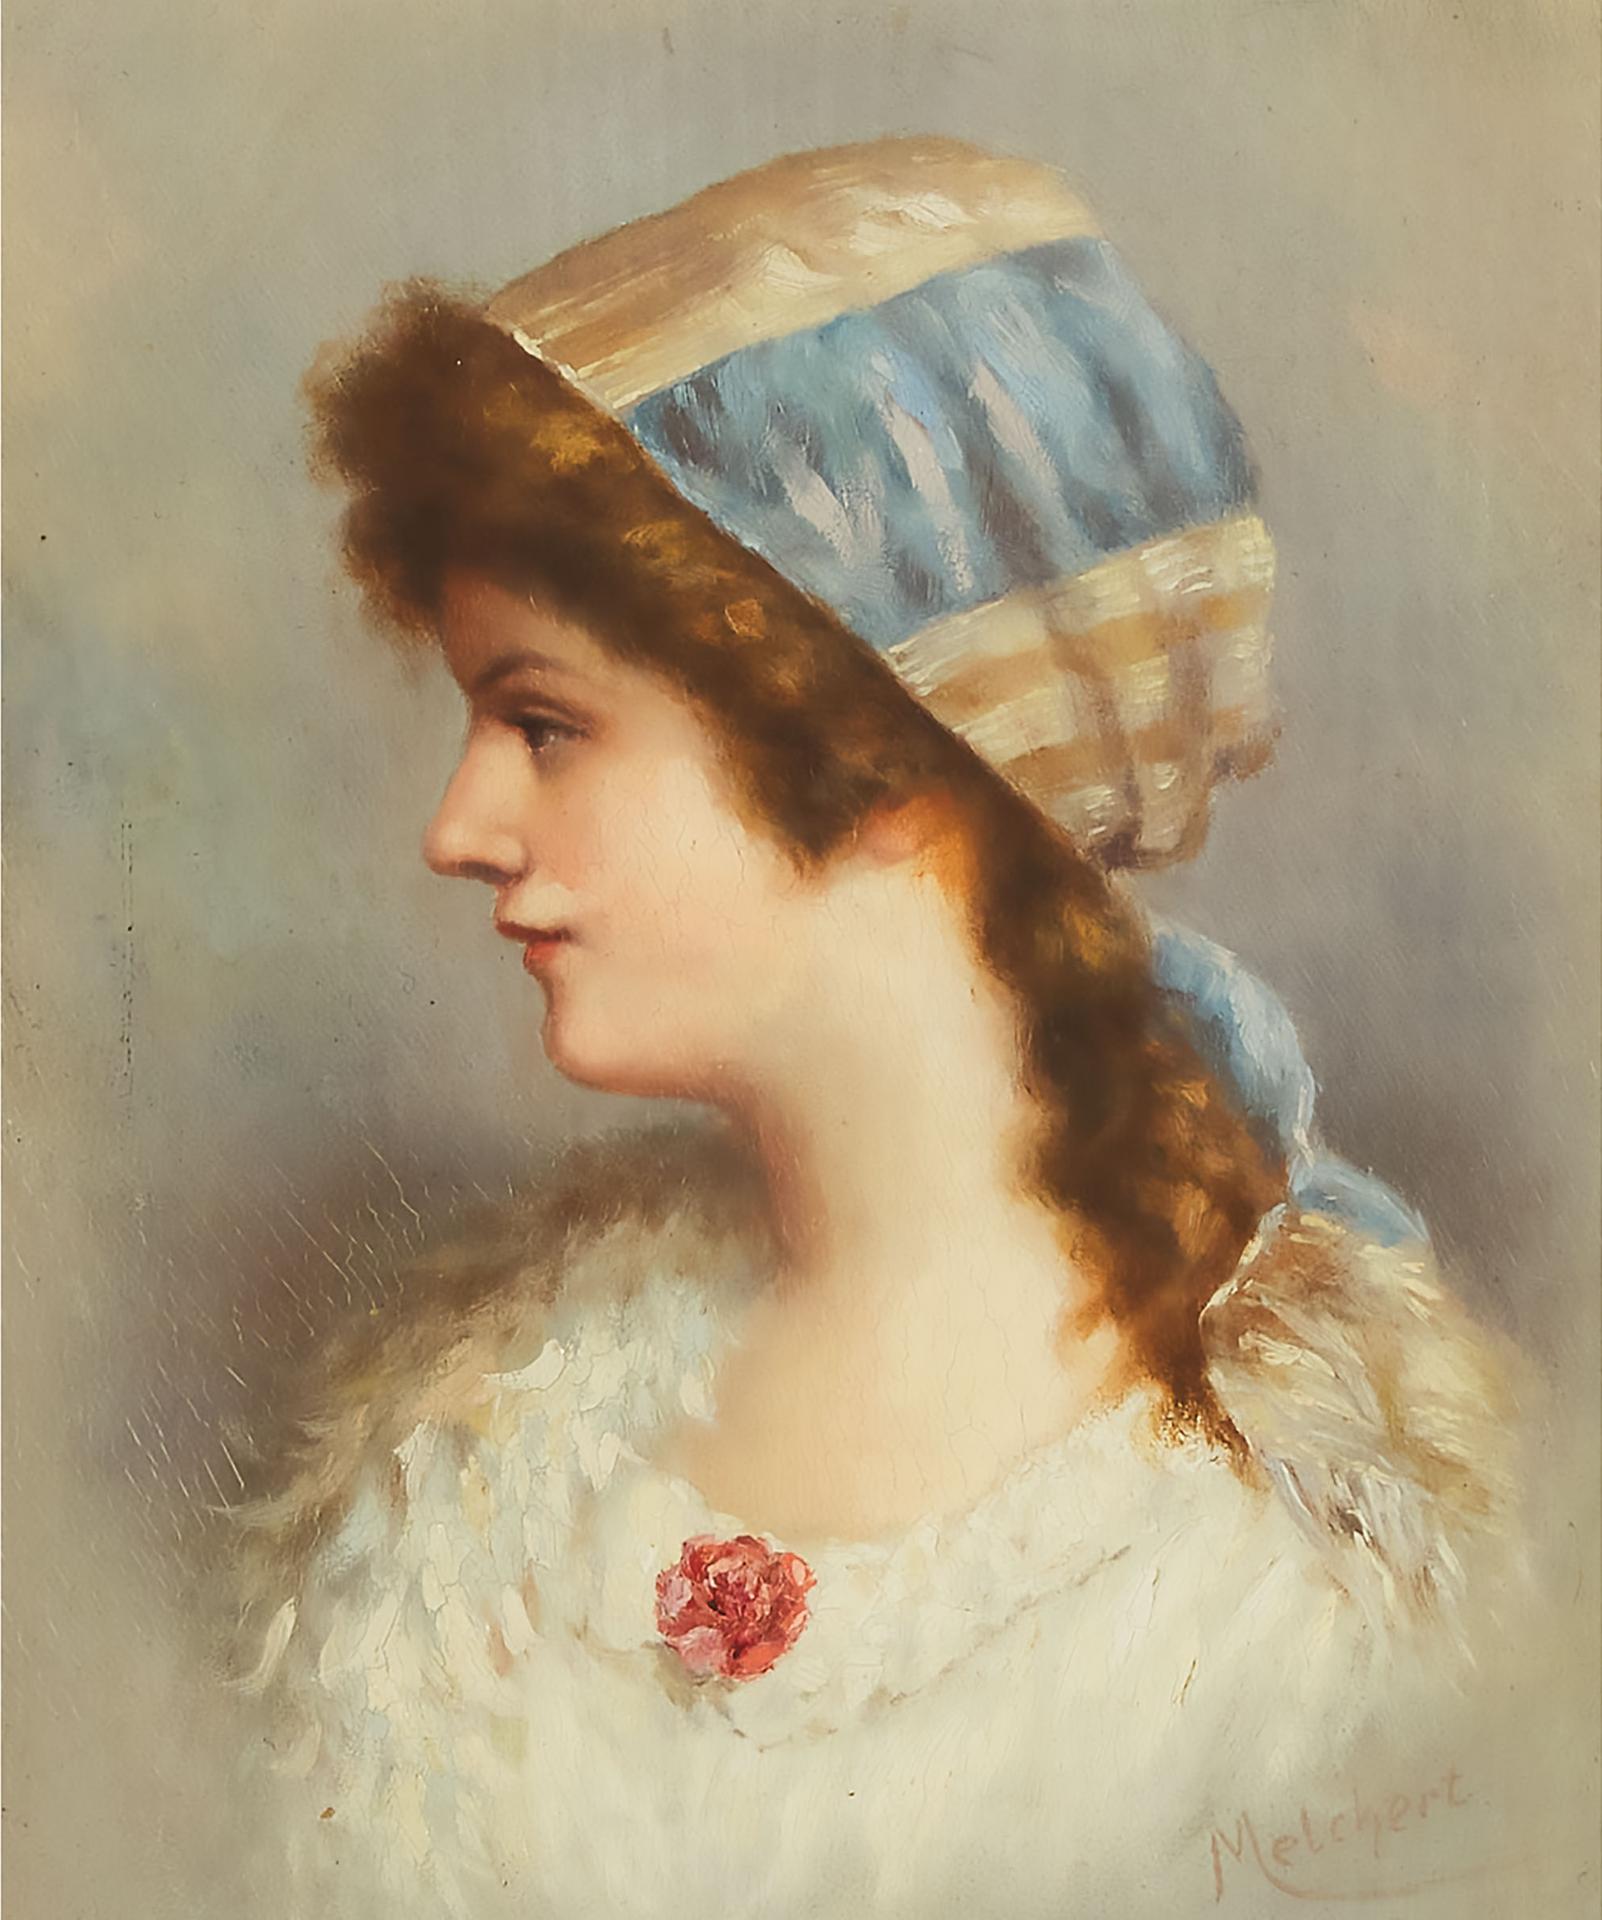 Adolf Melchert - Portrait Of A Woman Wearing A Headscarf